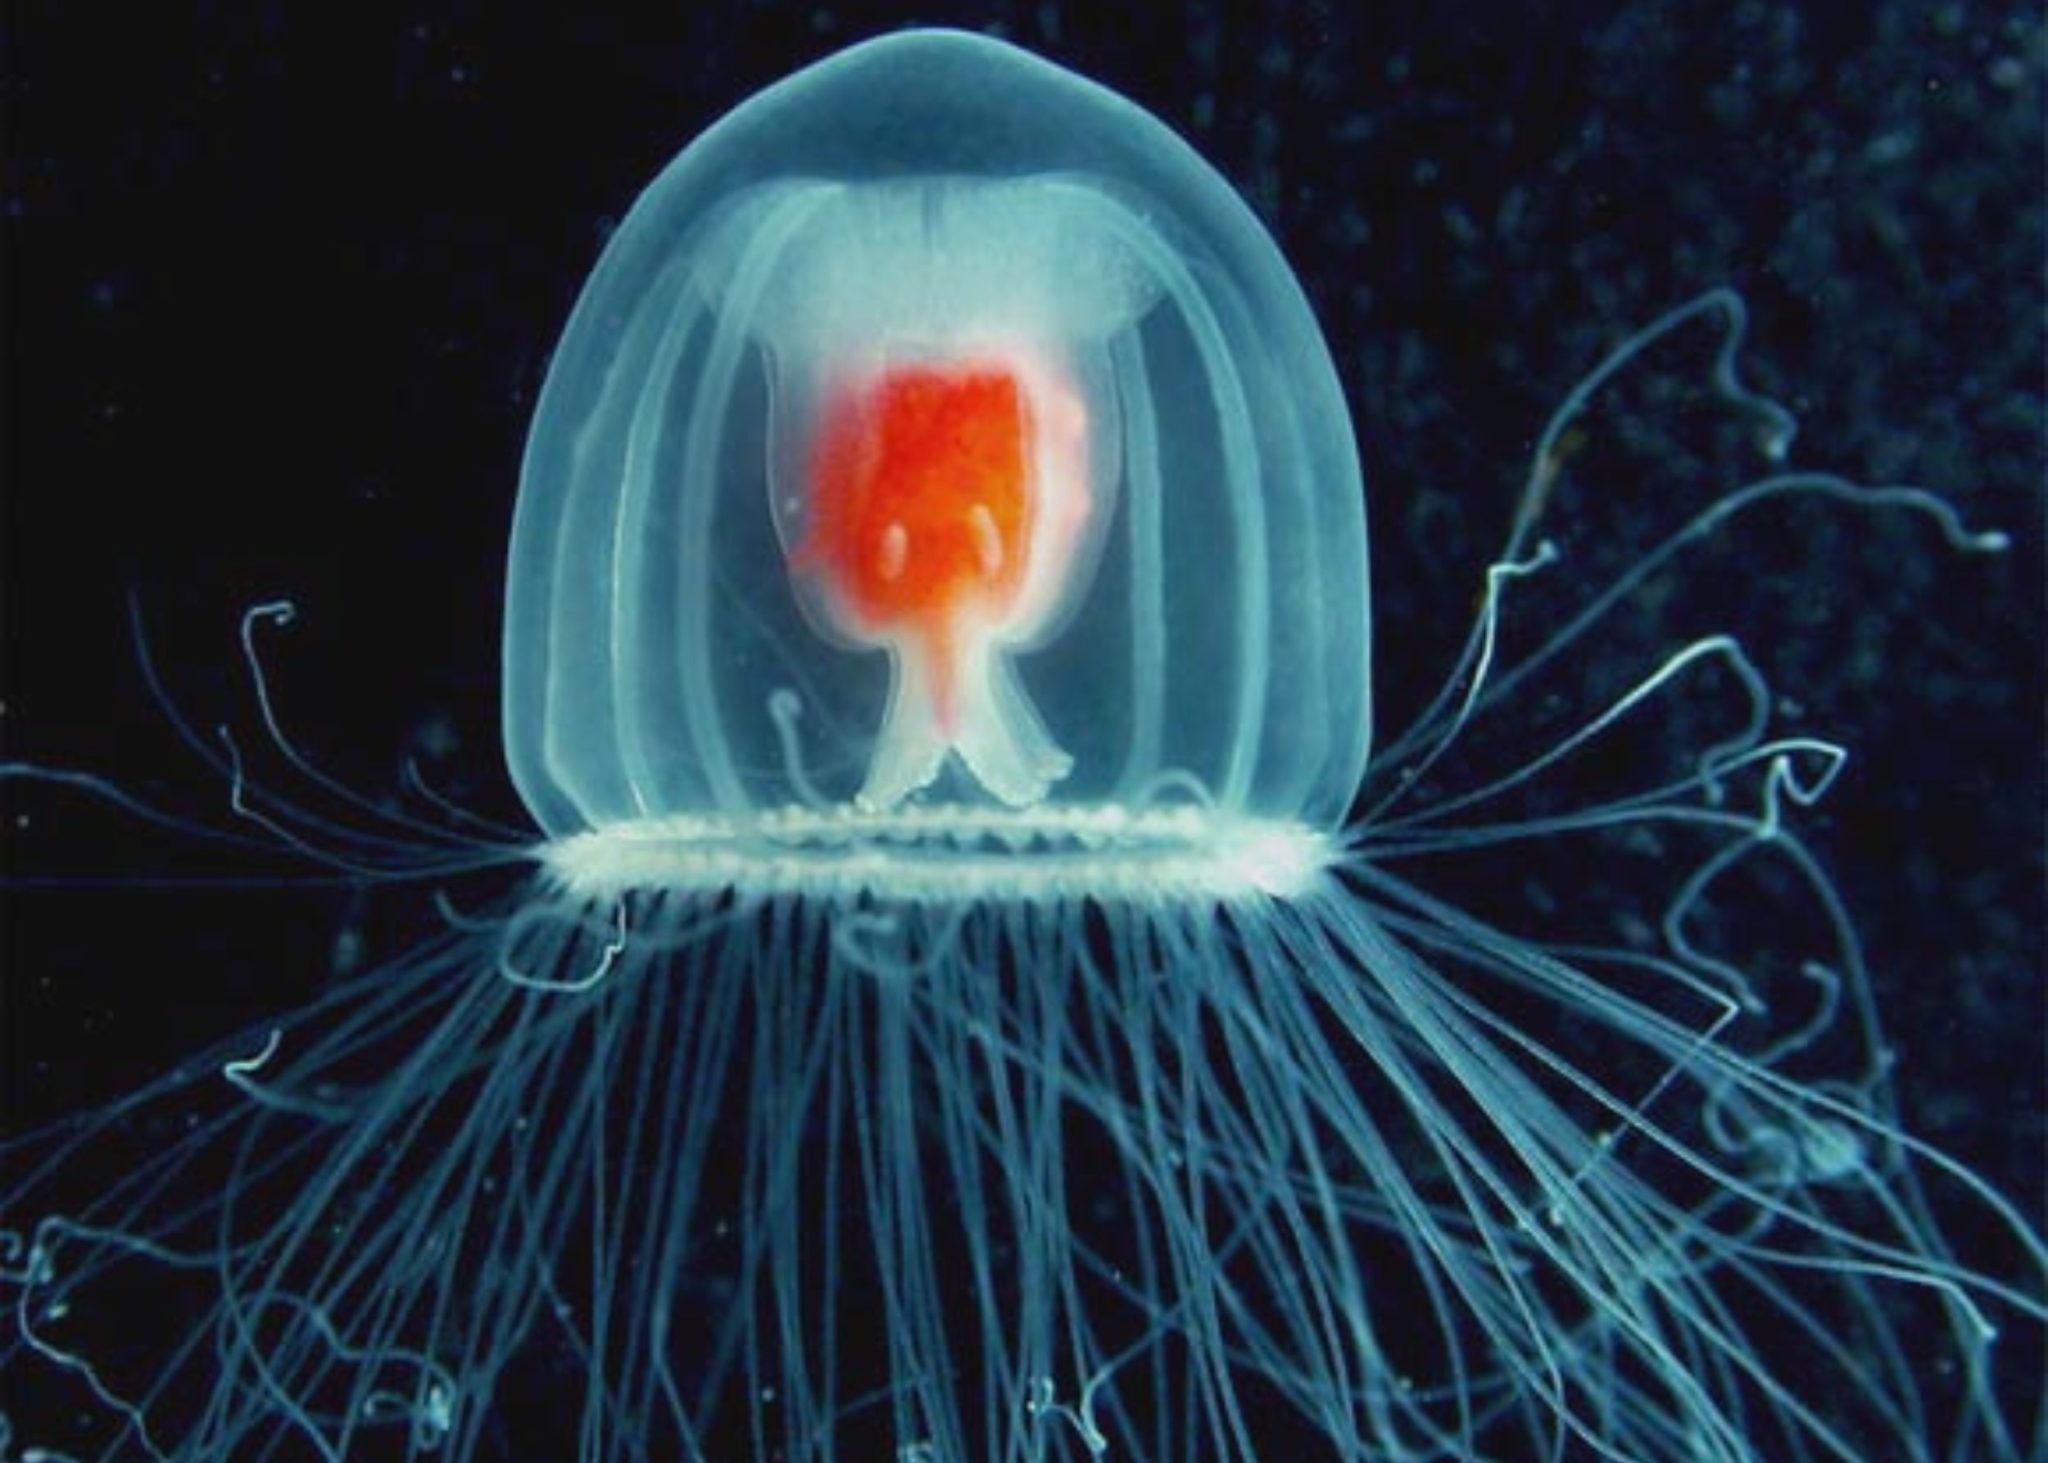 бессмертная медуза ДНК кредит п Шухерт черви cc by nc sa 4 2048x1463 1